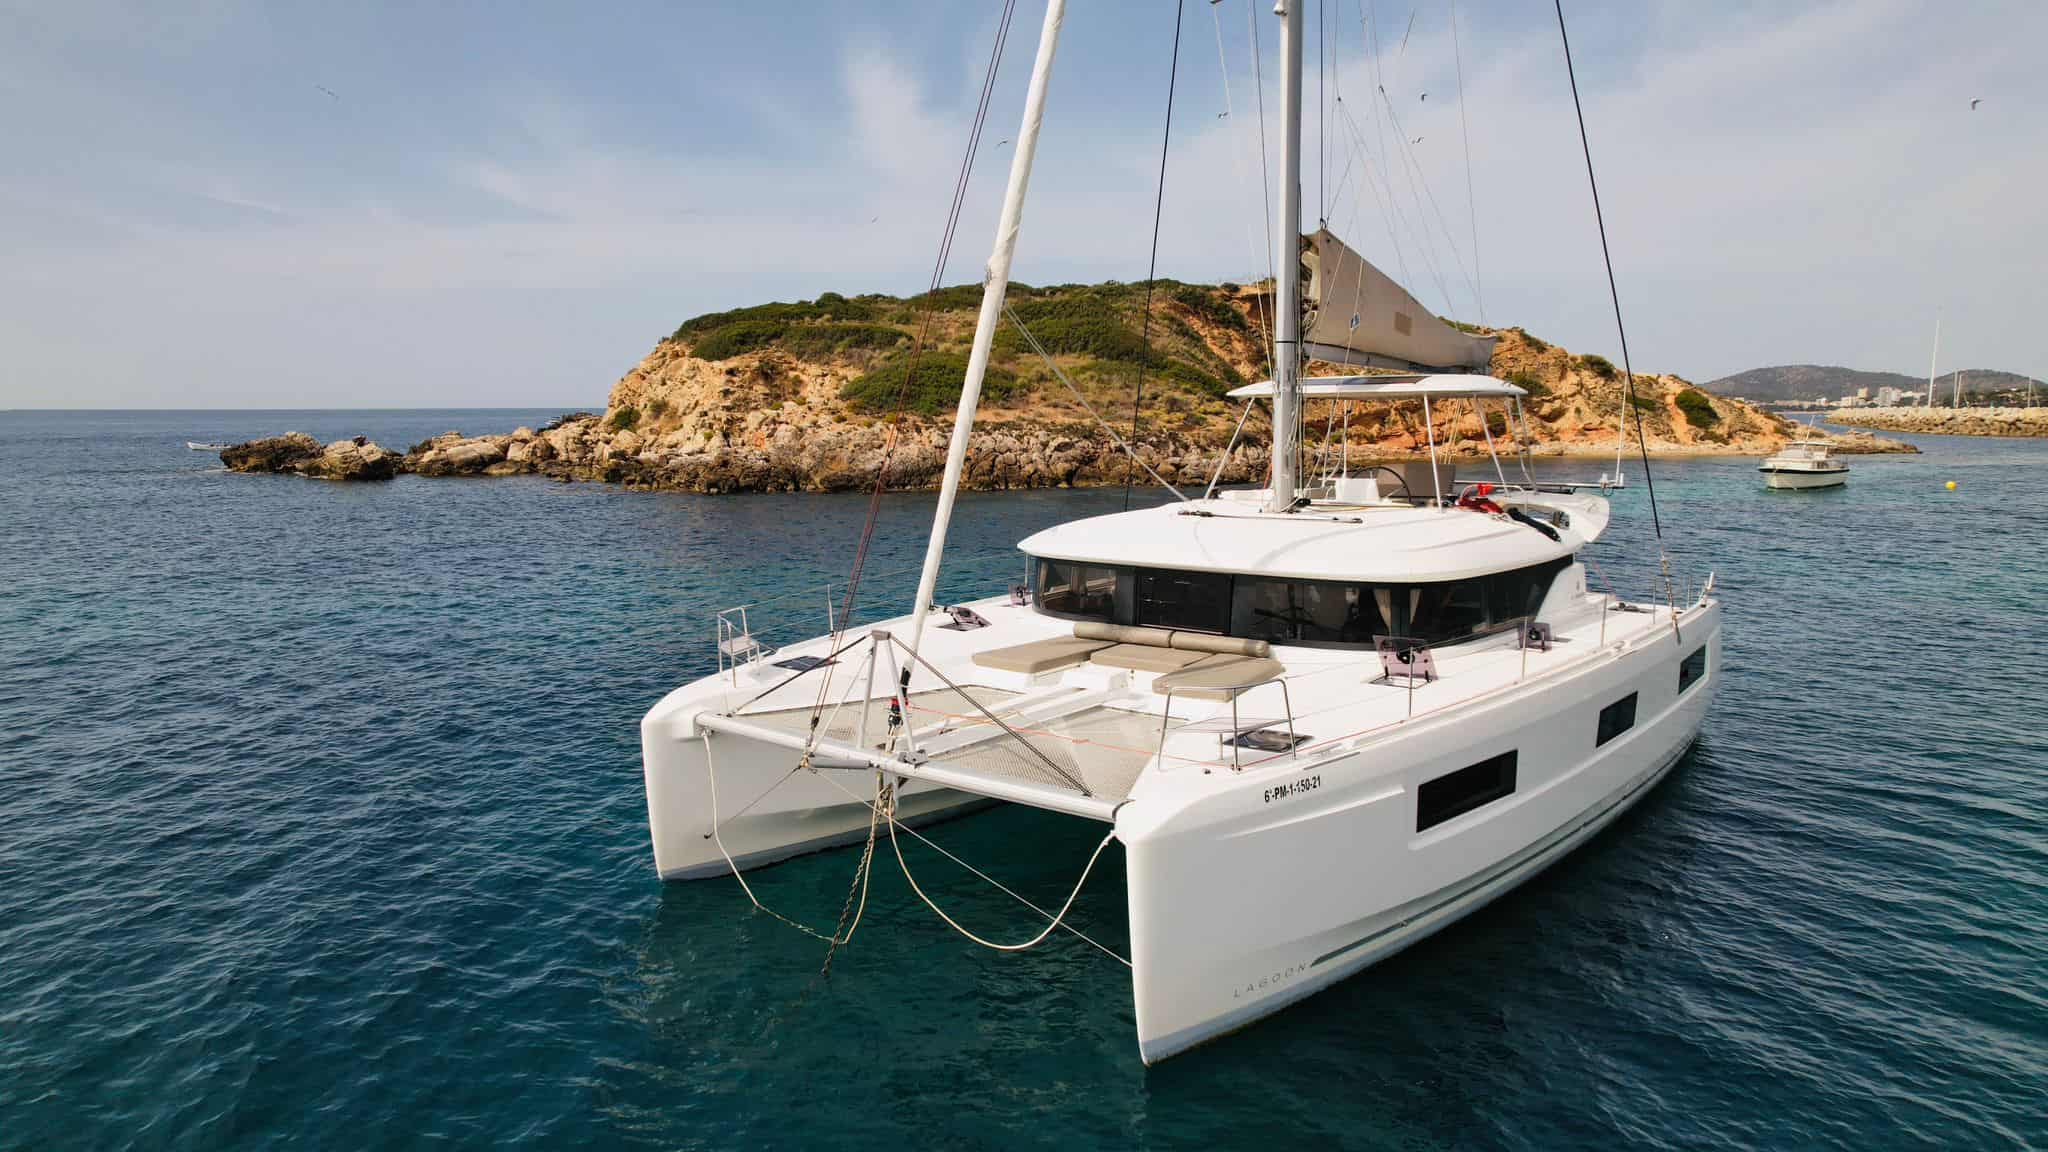 El "Lagoon 46" de Ecc Yacht Charter fondeado en una bonita cala de Mallorca